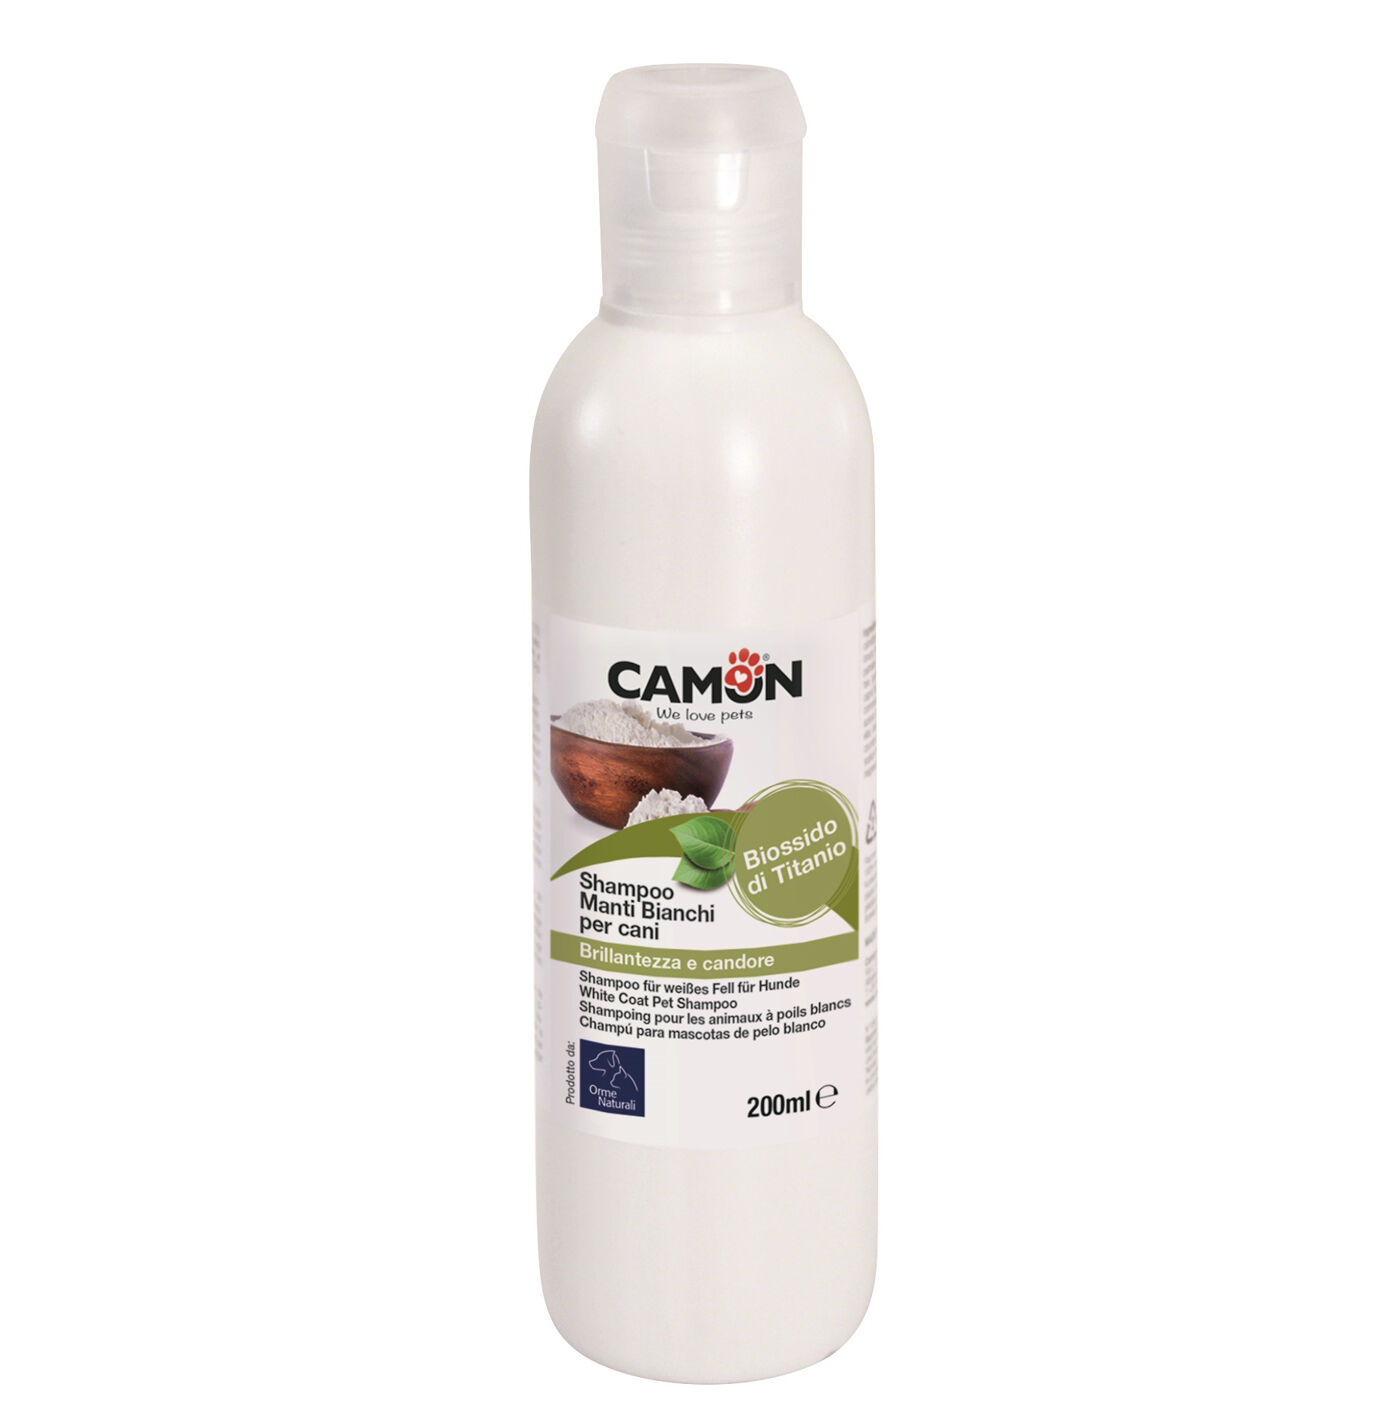 Camon-Shampoo-fuer-weisses-Fell-hund-online-kaufen-CO-G801